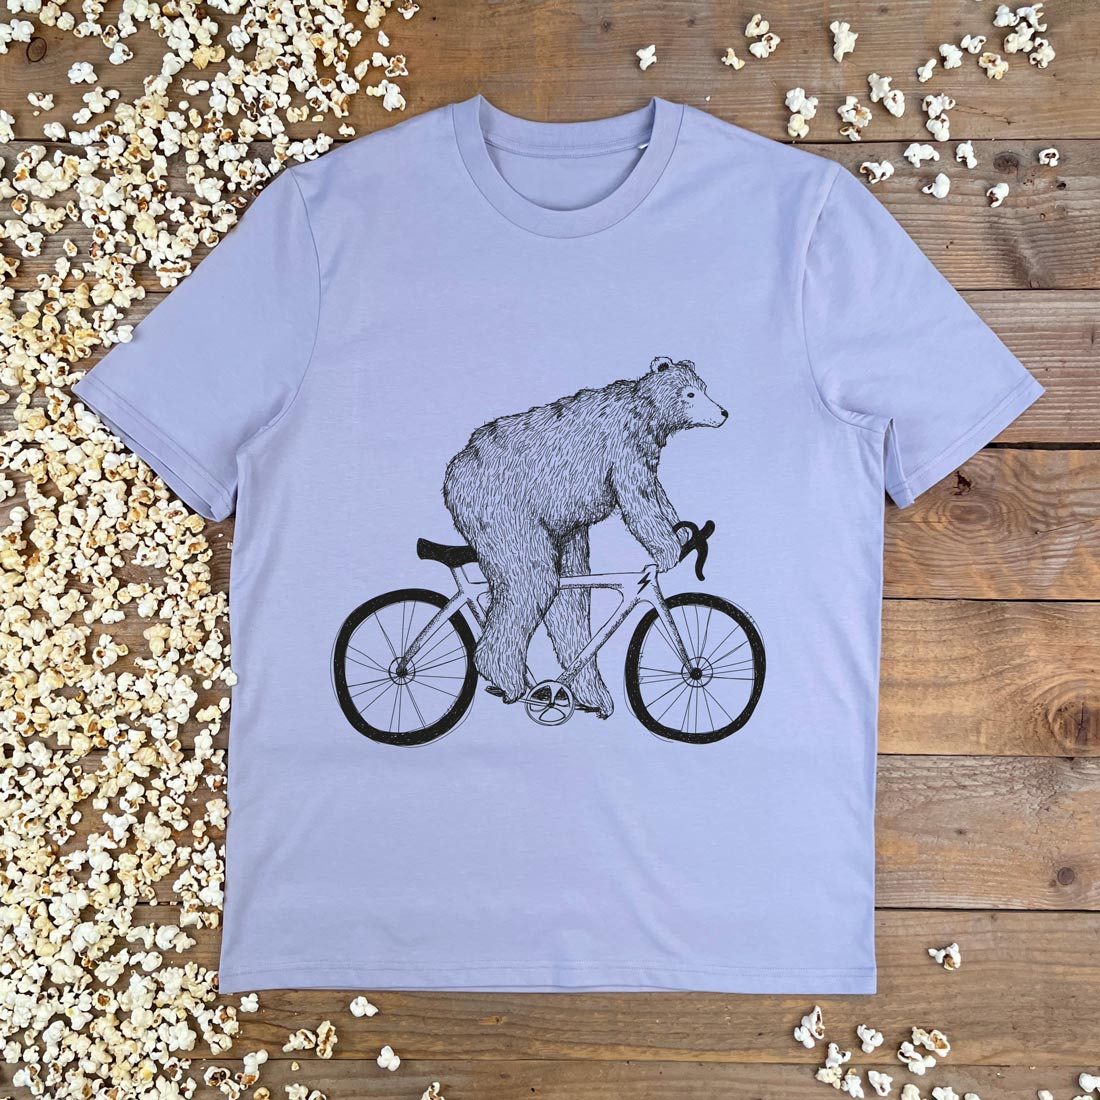 bear riding a racer bike on lilac tshirt